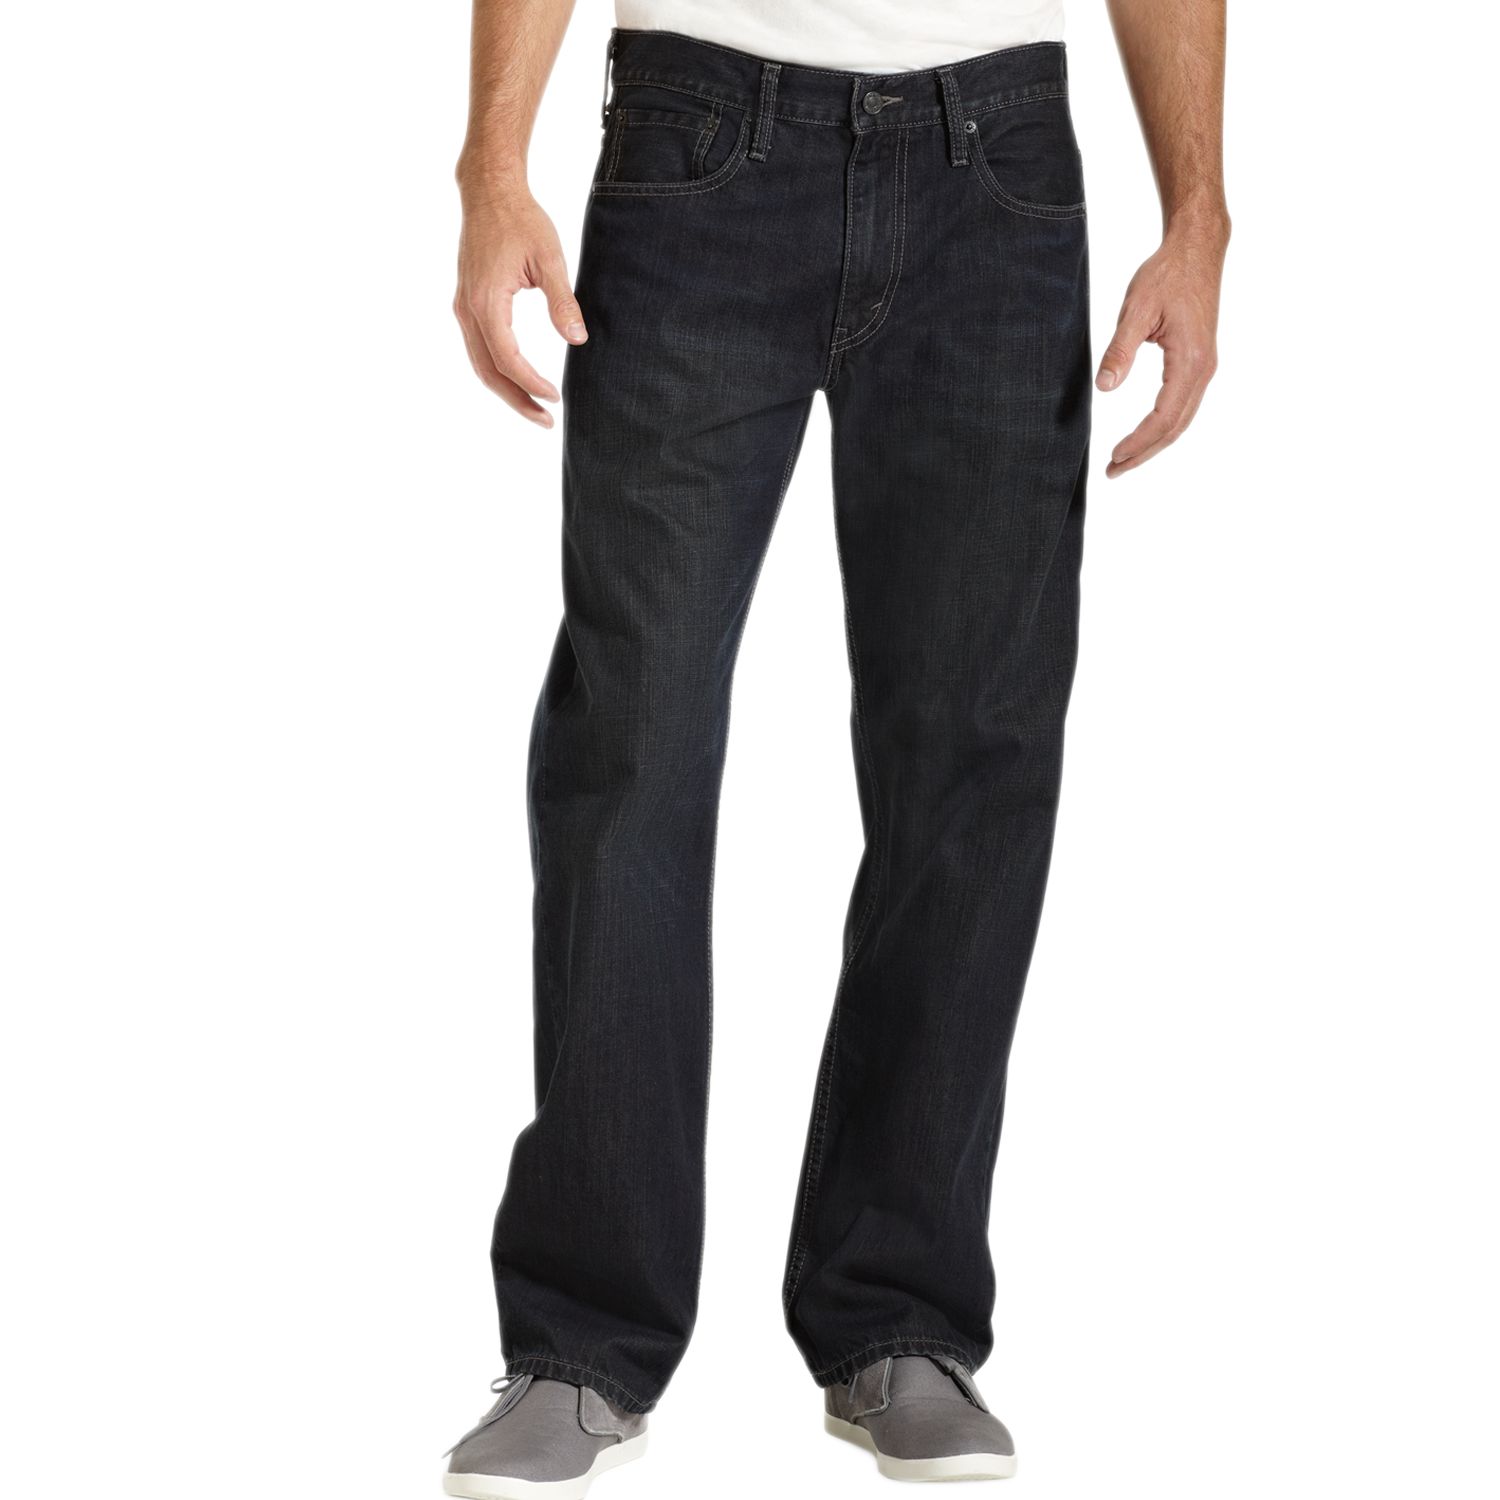 Levi's 569 Loose StraightFit Jeans - Men